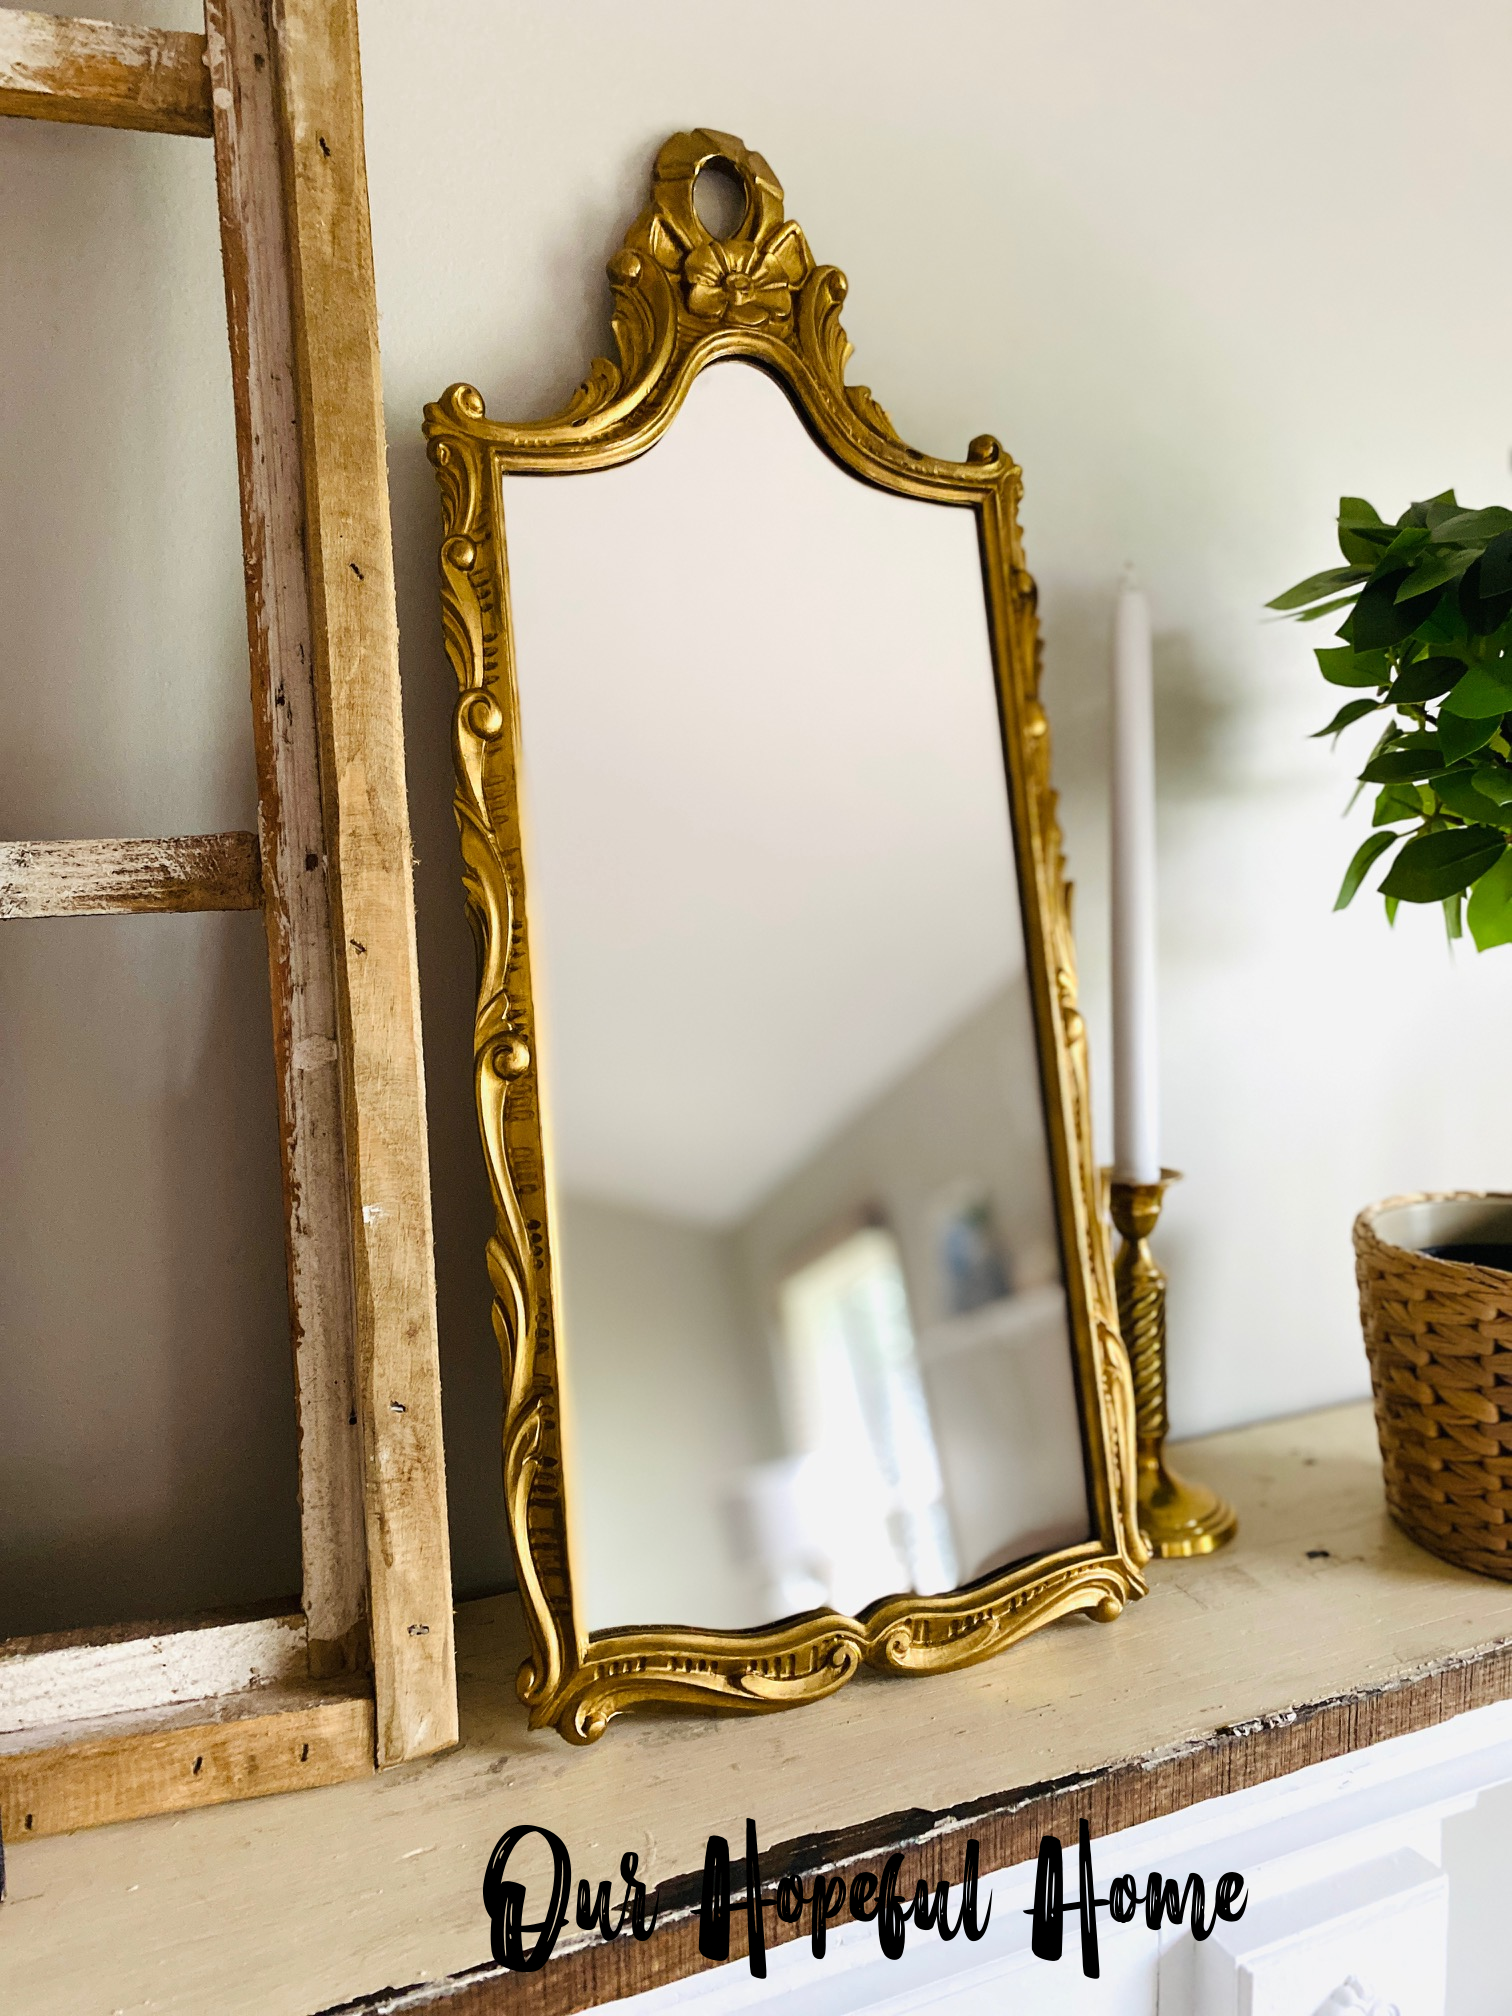 Our Hopeful Home: Gold Leaf Rub 'n Buff Magic: Thrift Store Mirror  Transformation